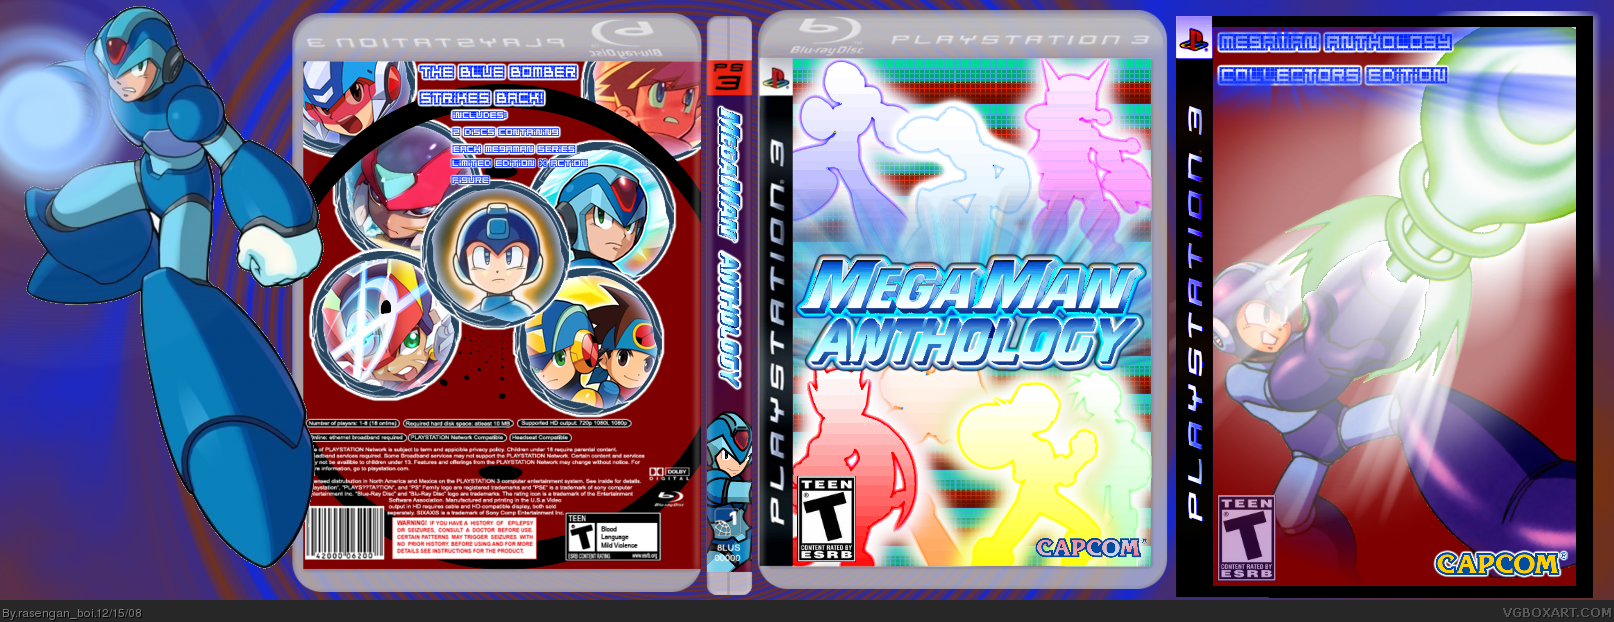 Mega Man Anthology box cover